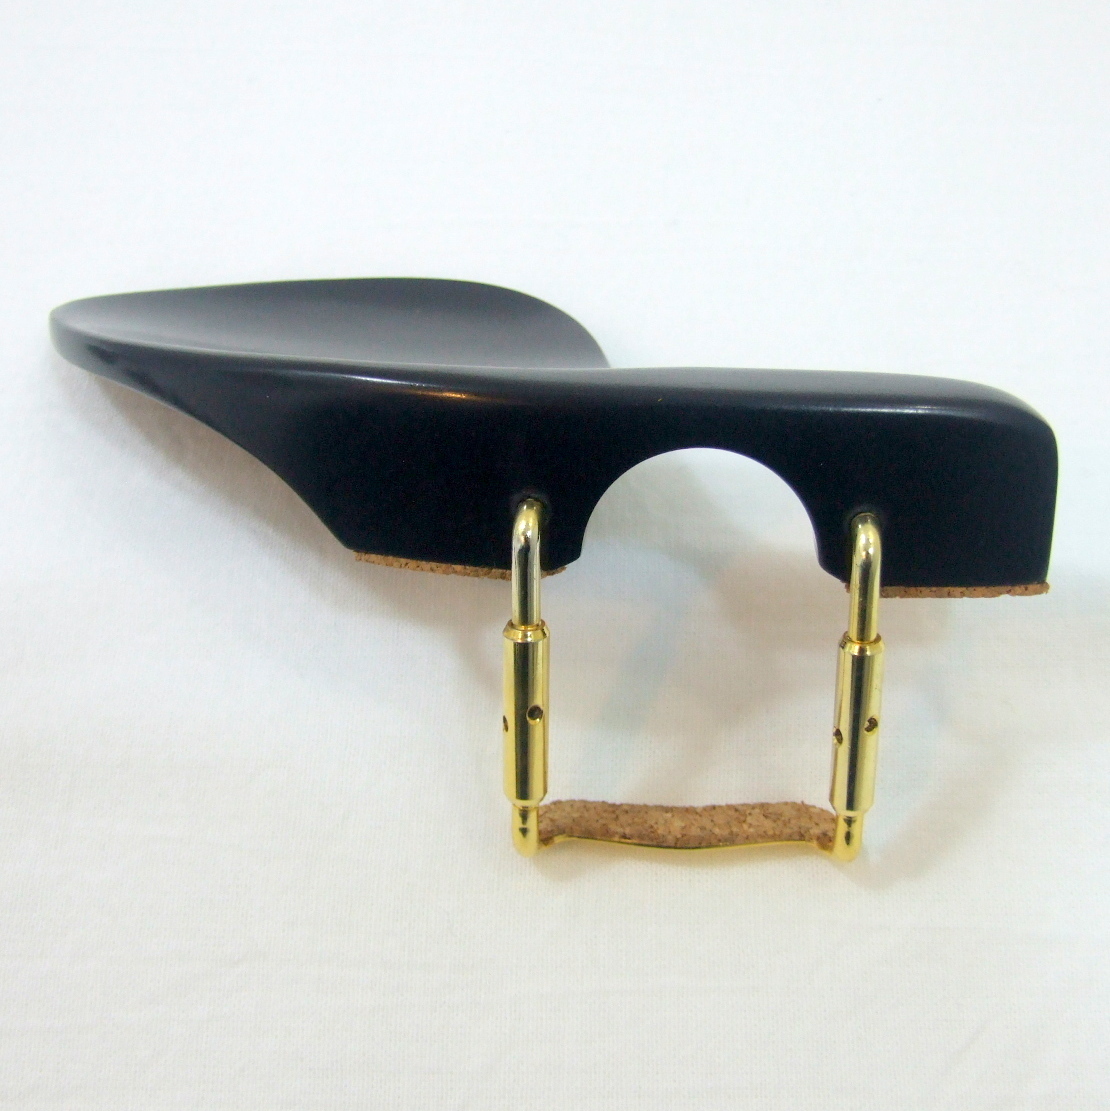  violin 4/4 ebony Gold decoration fitting set .. present . Hill type tailpiece hard type peg ebony Ebony India made 